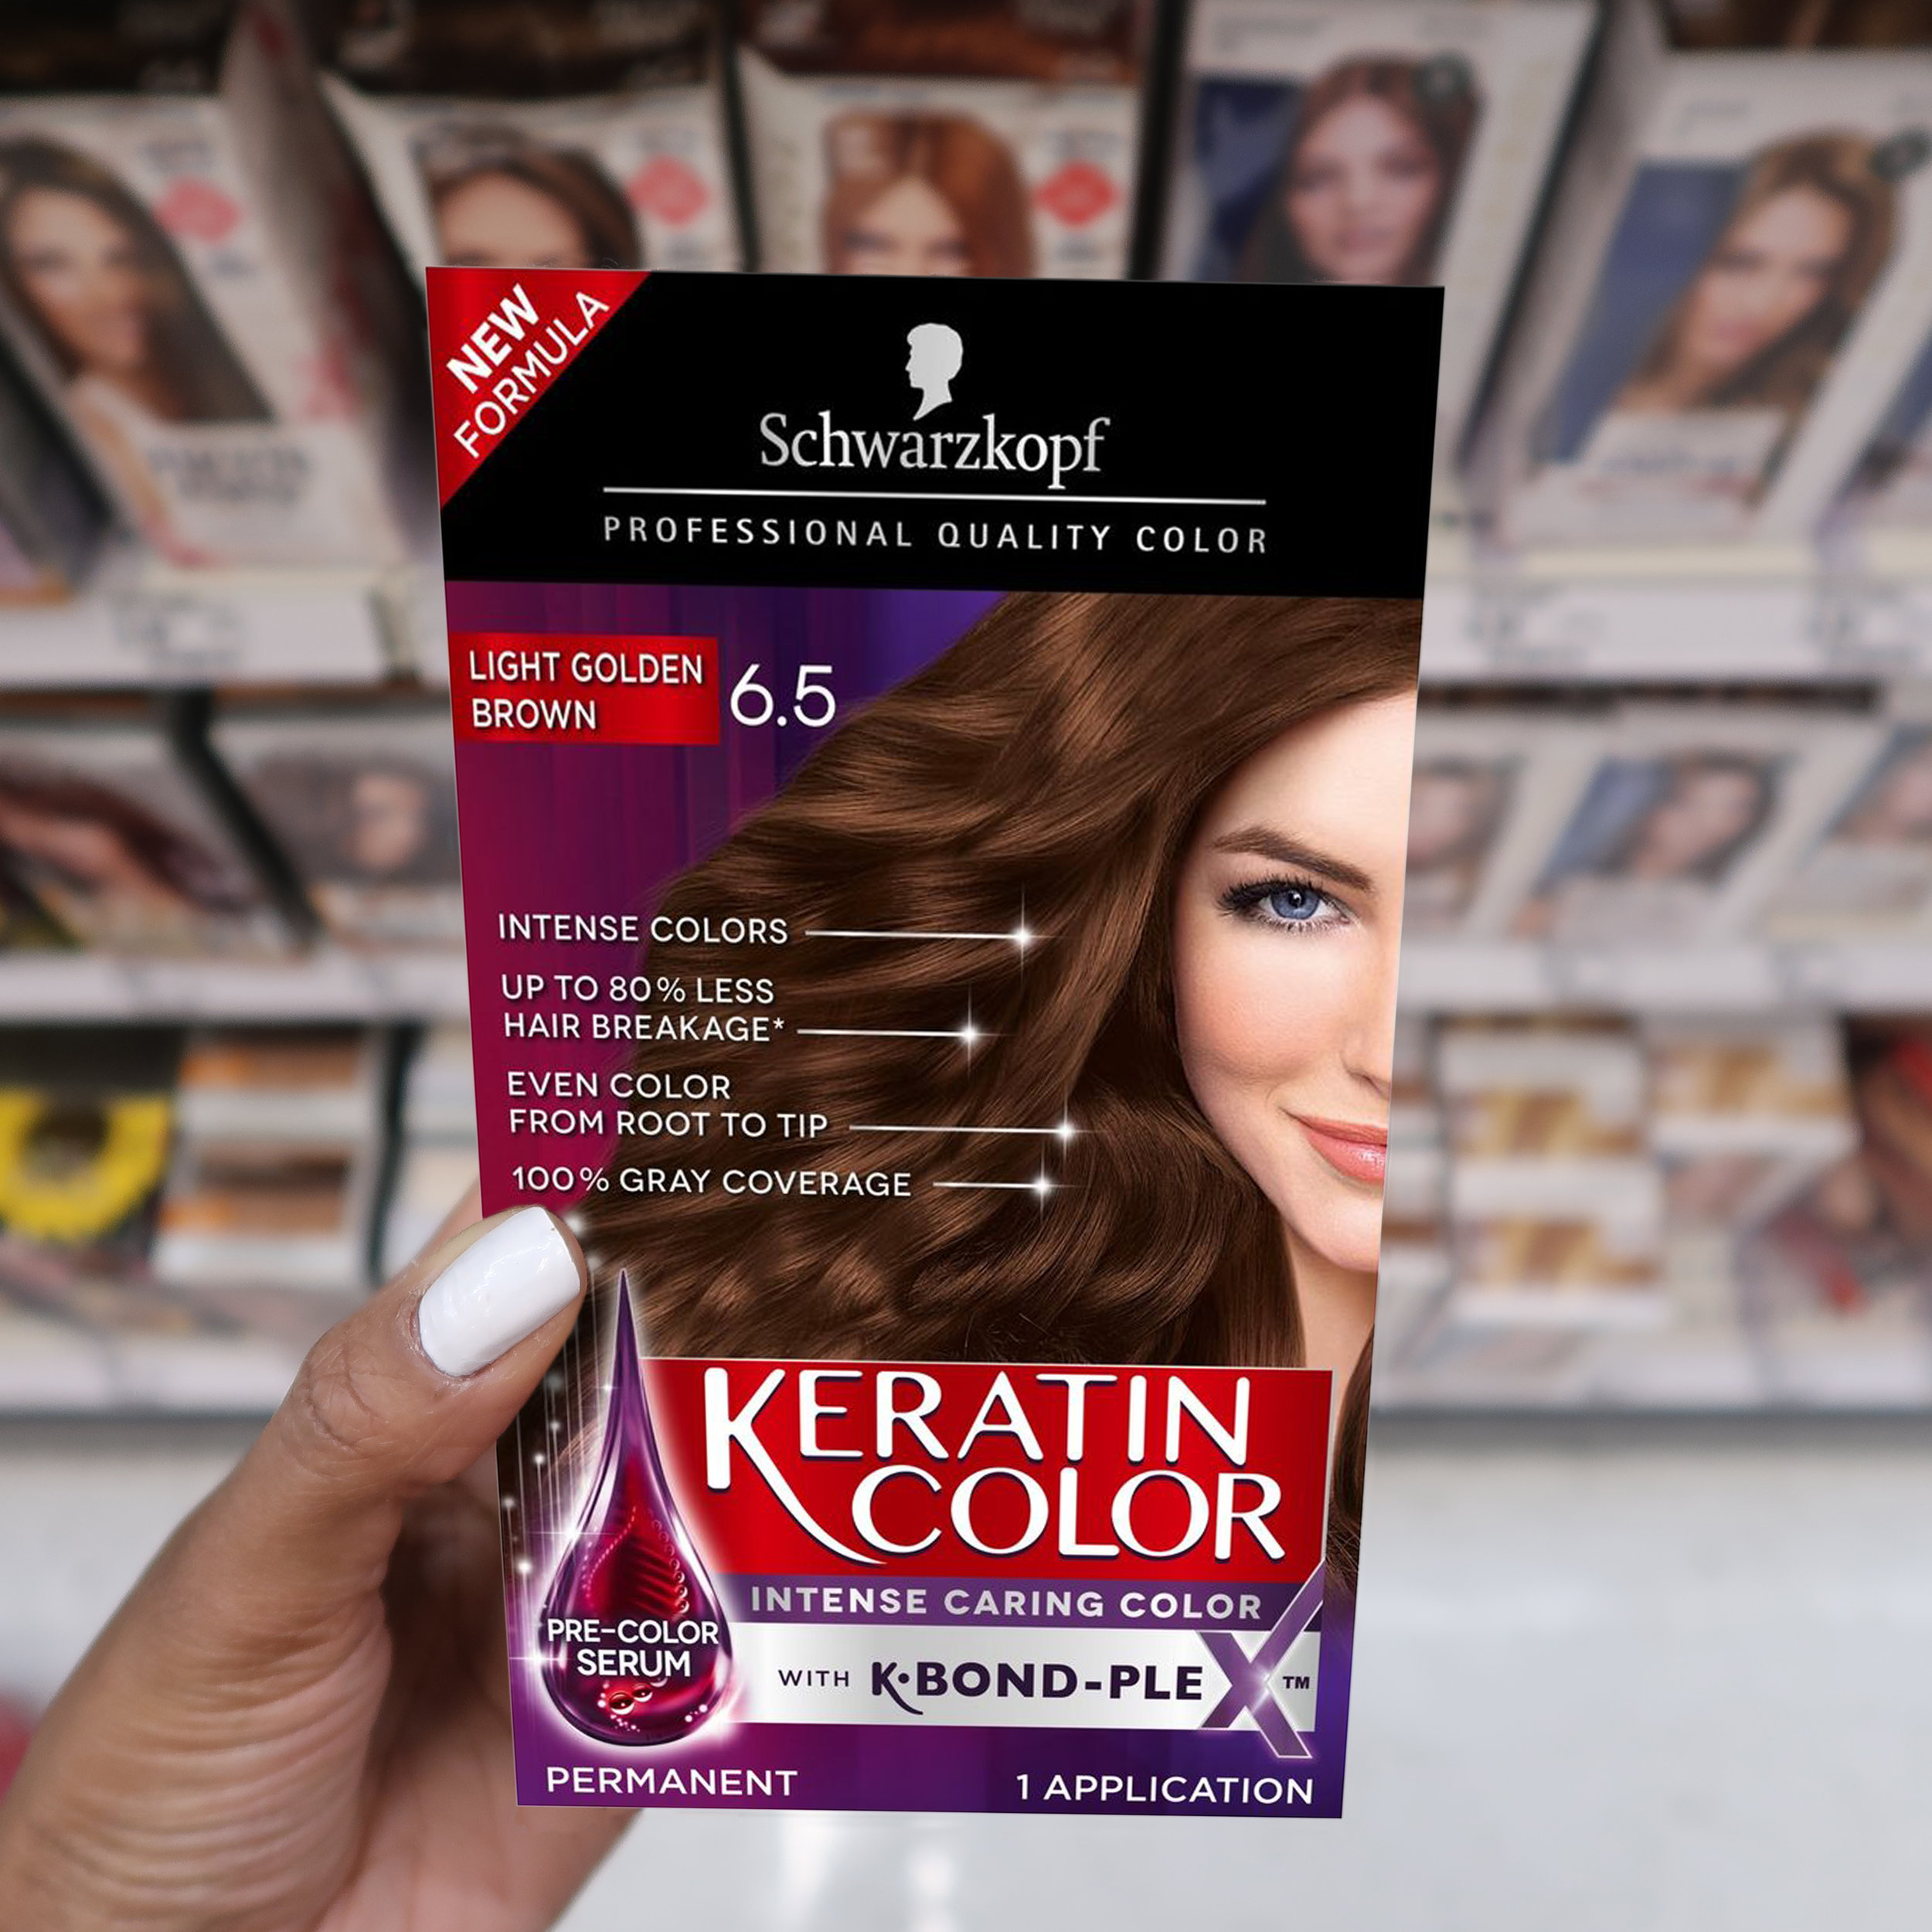 Holiday Glam Hair with Schwarzkopf® Keratin Color — Malikah Kelly